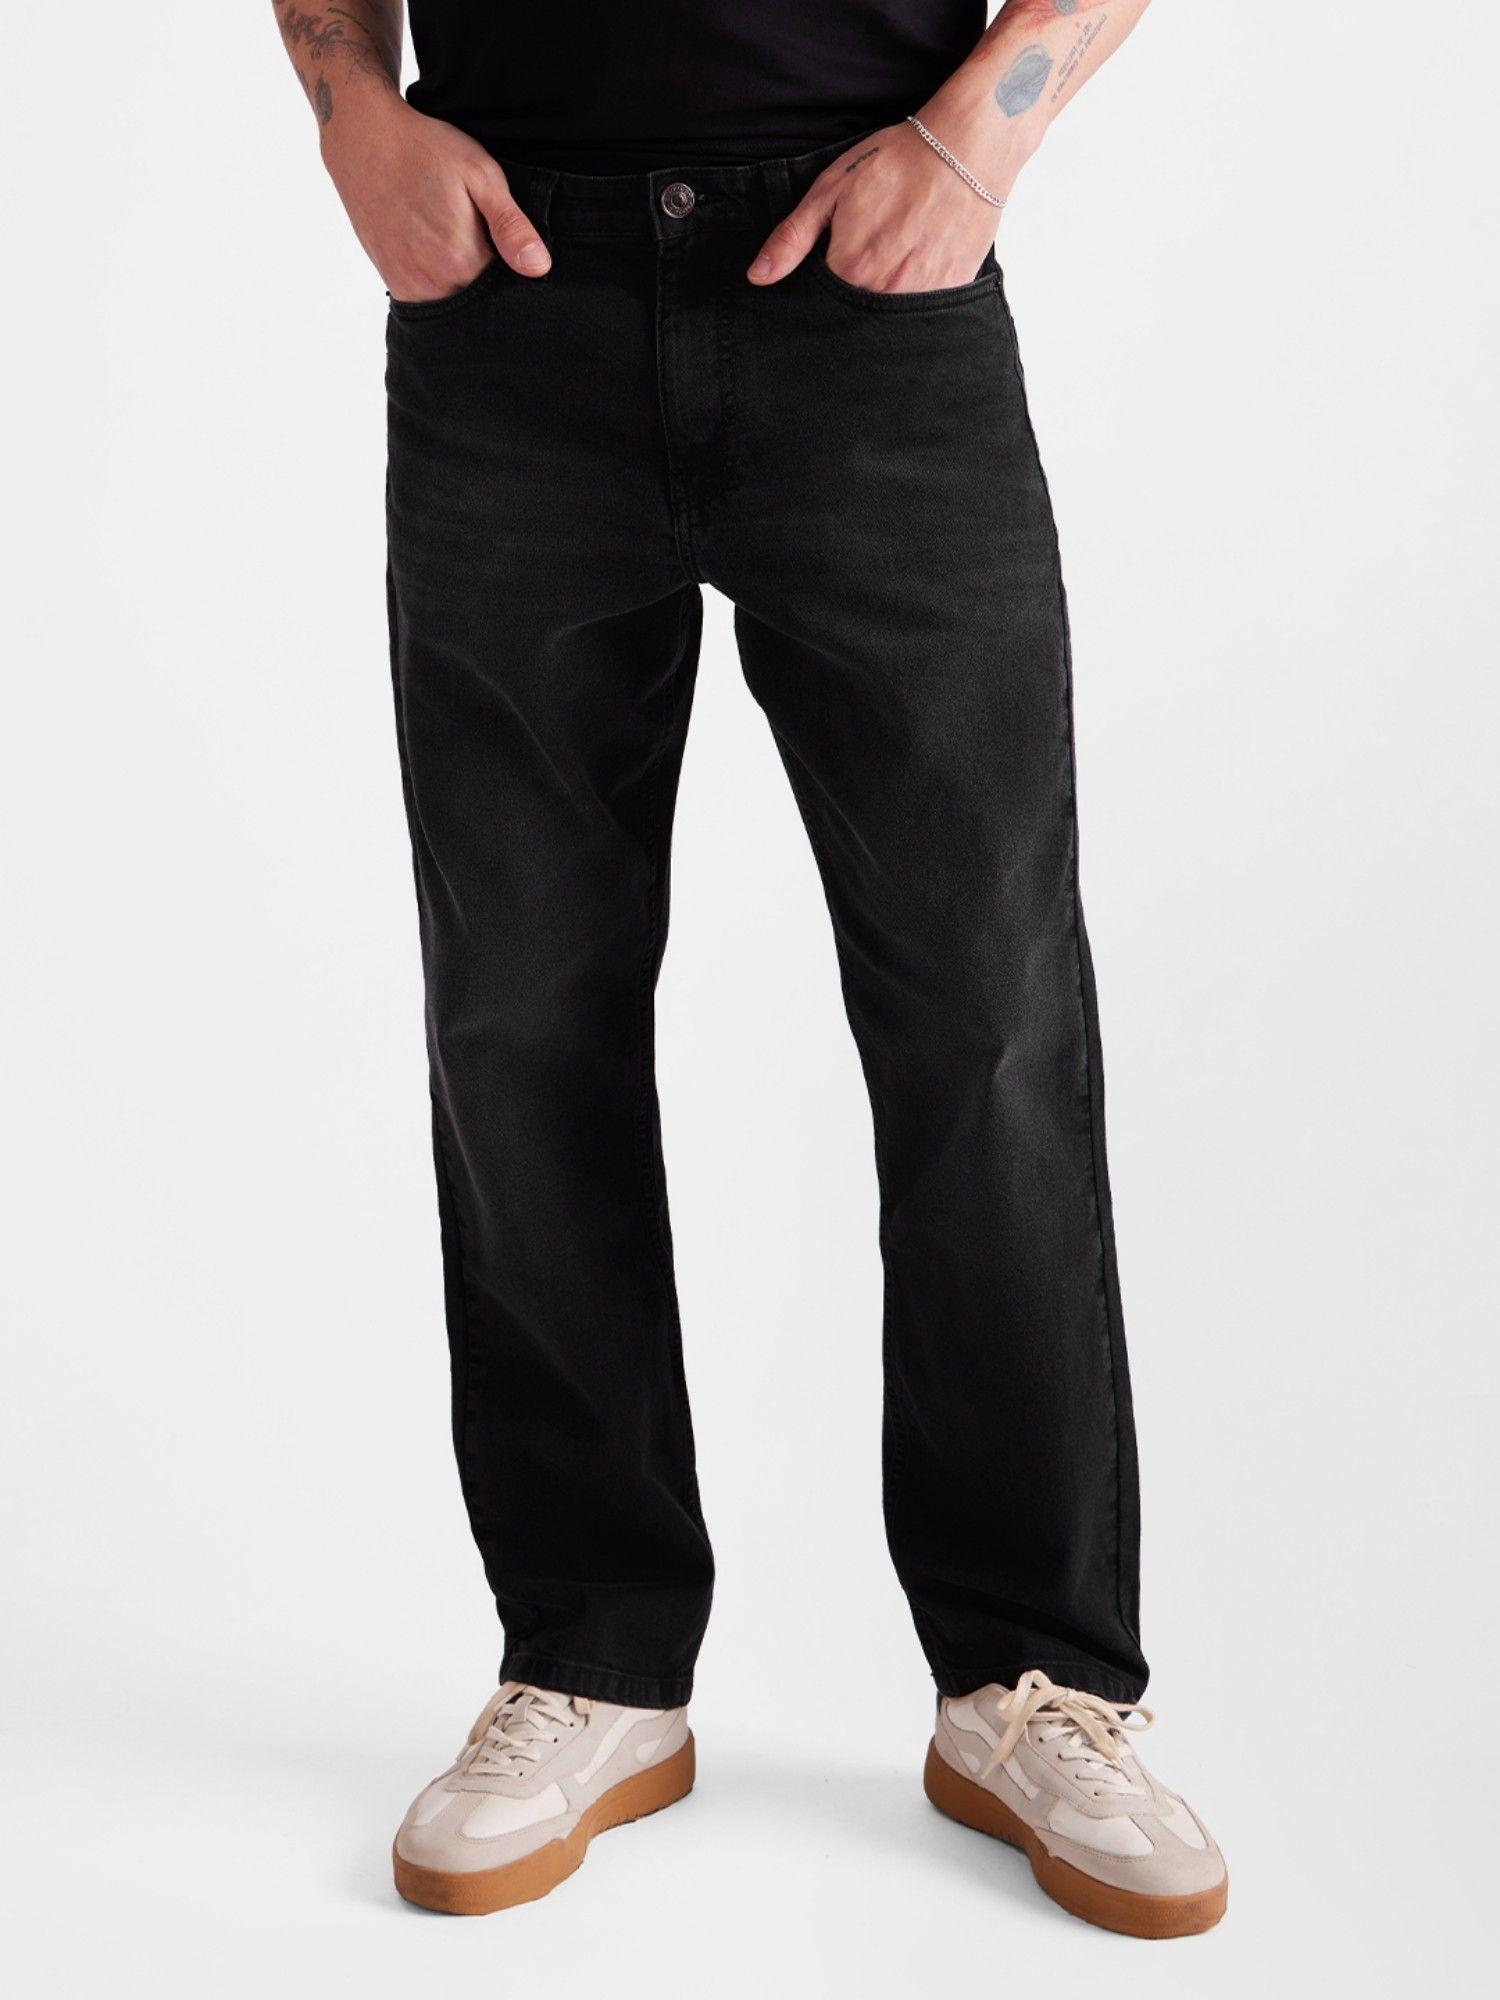 original solids: black (straight fit) jeans for mens